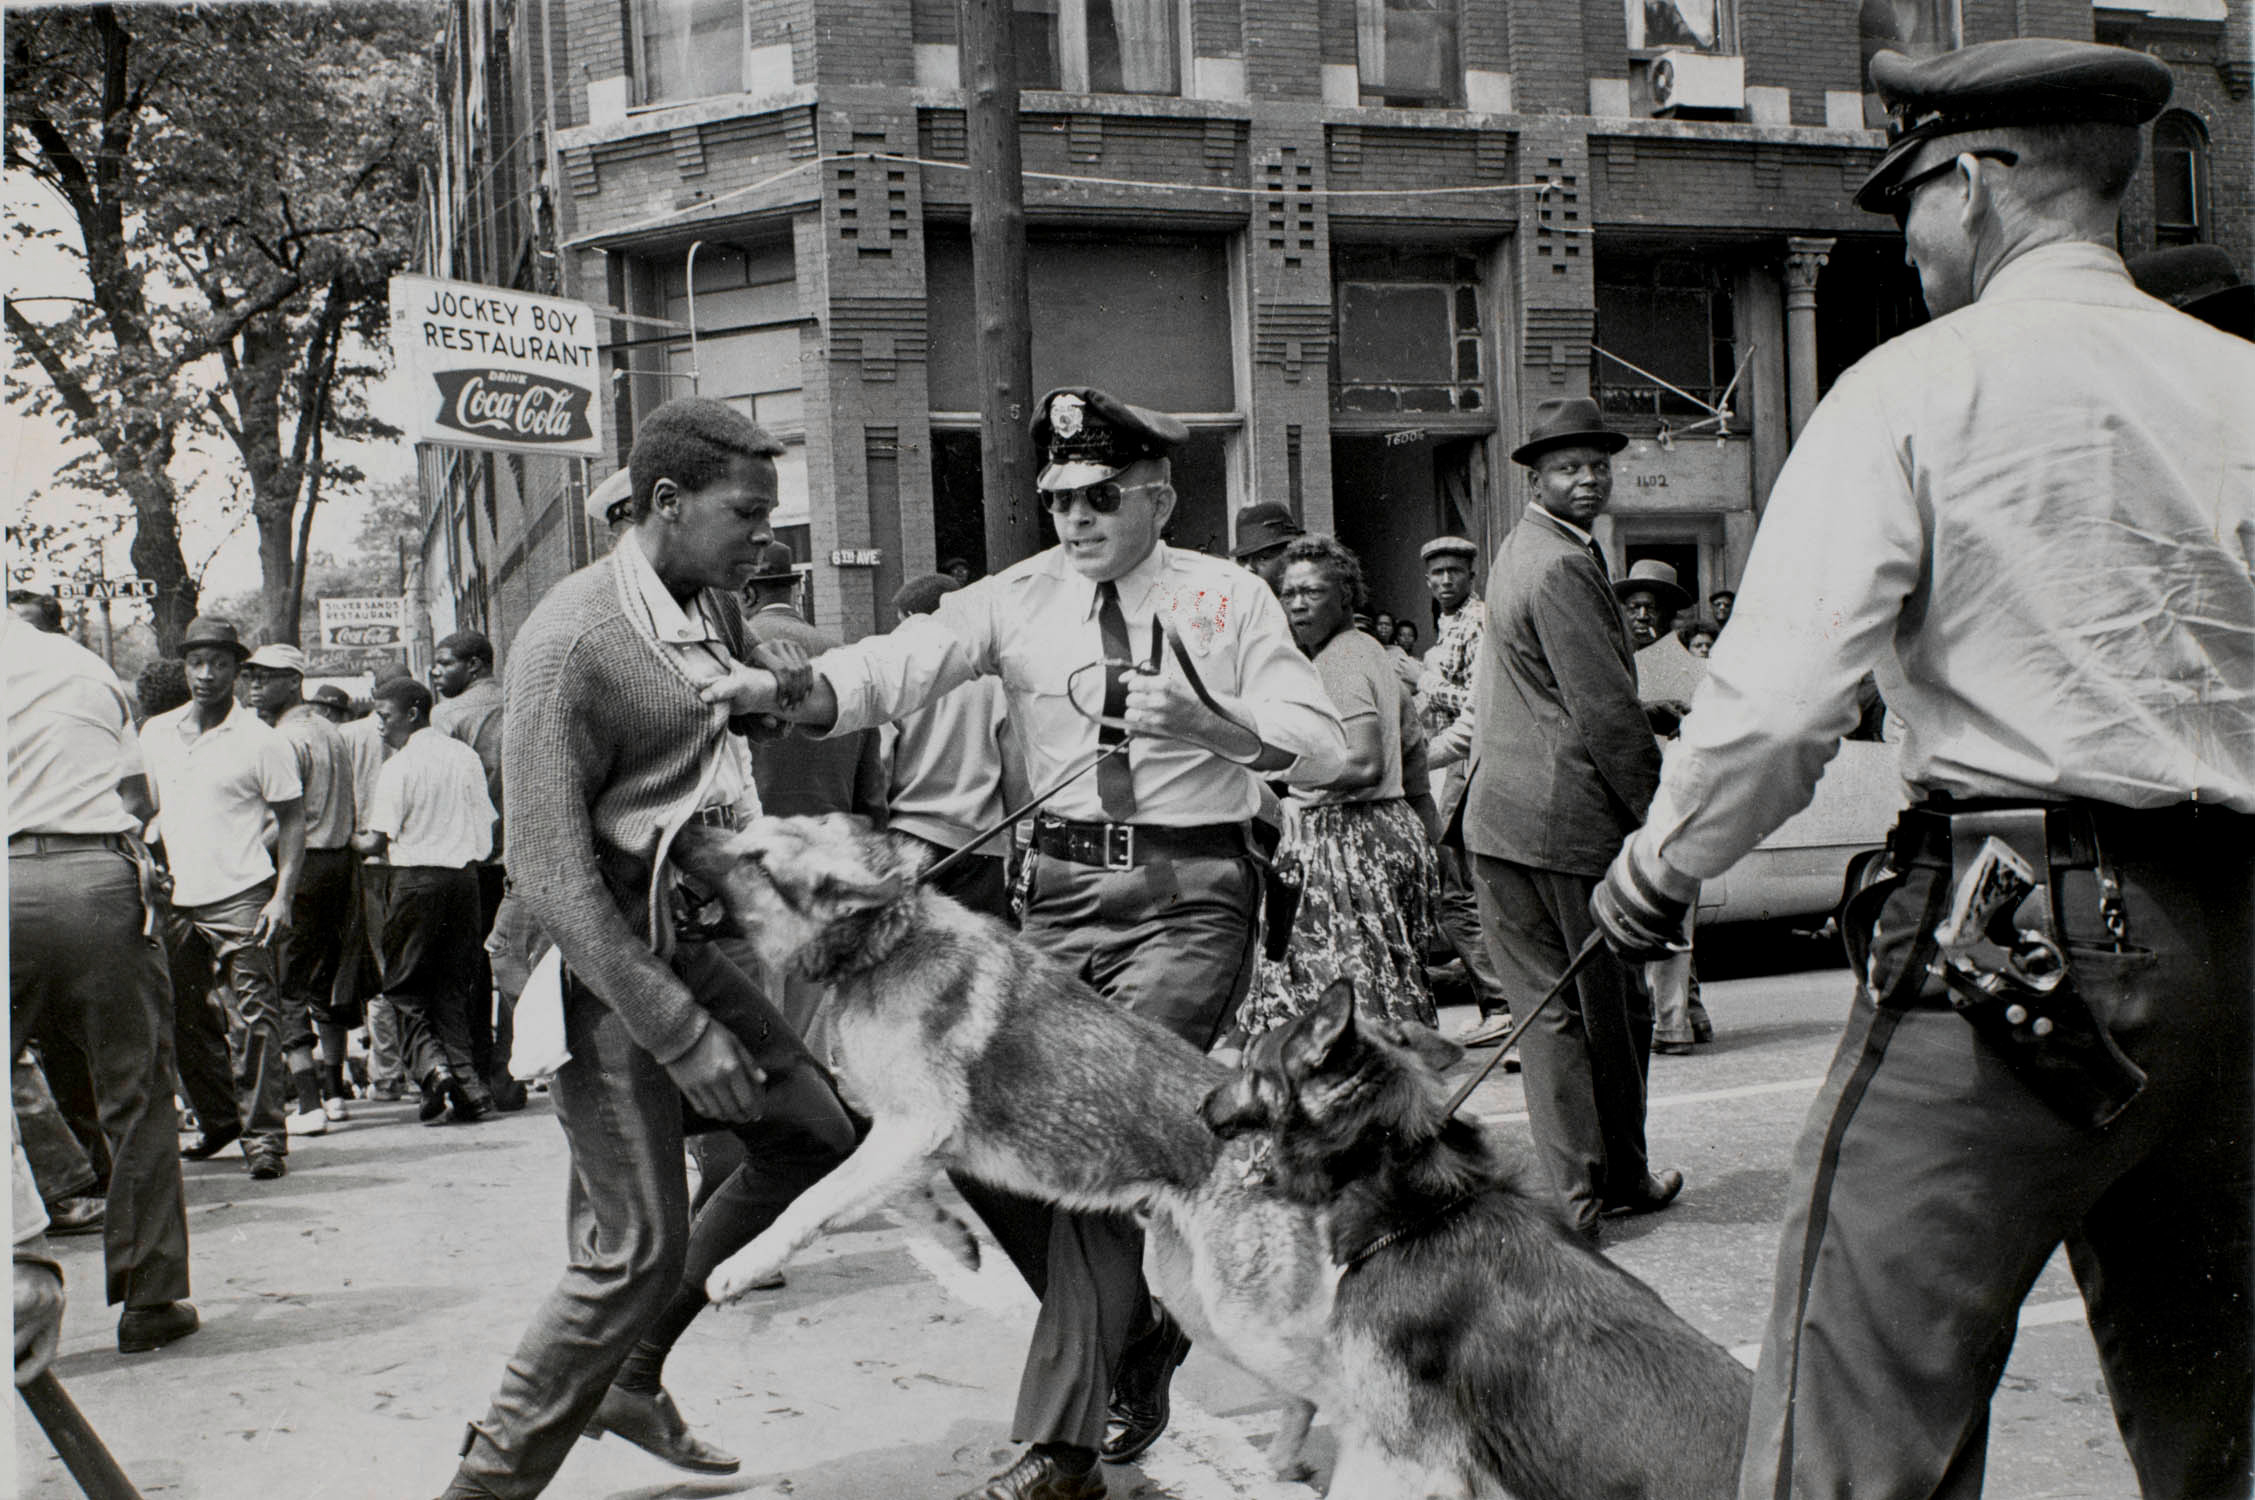 Police dog attack, Birmingham Alabama in 1963 by Bill Hudson.